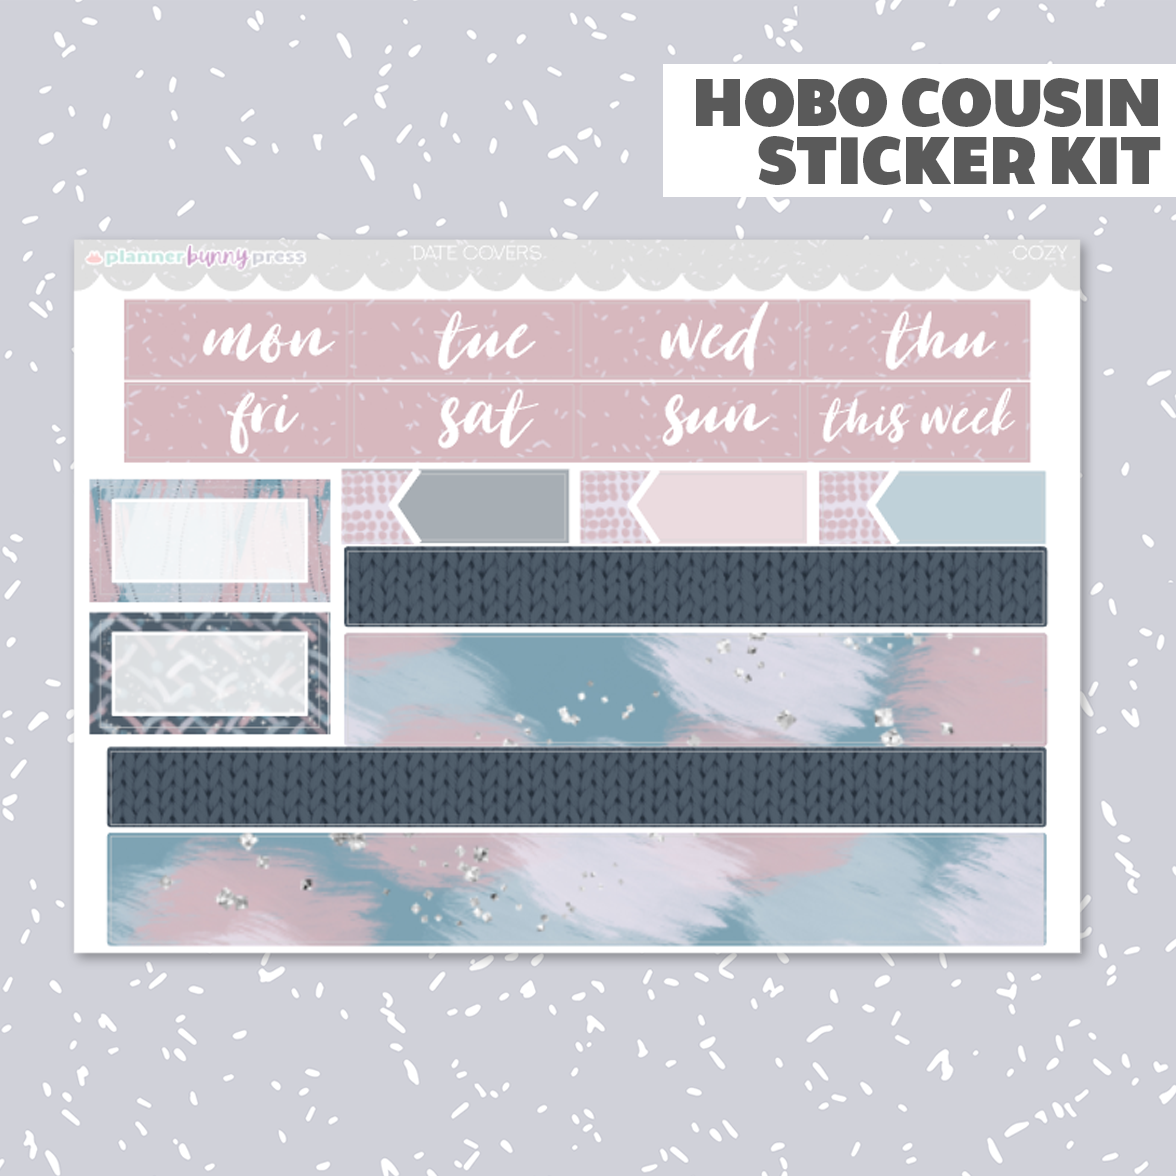 Cozy | Hobonichi Cousin Sticker Kit